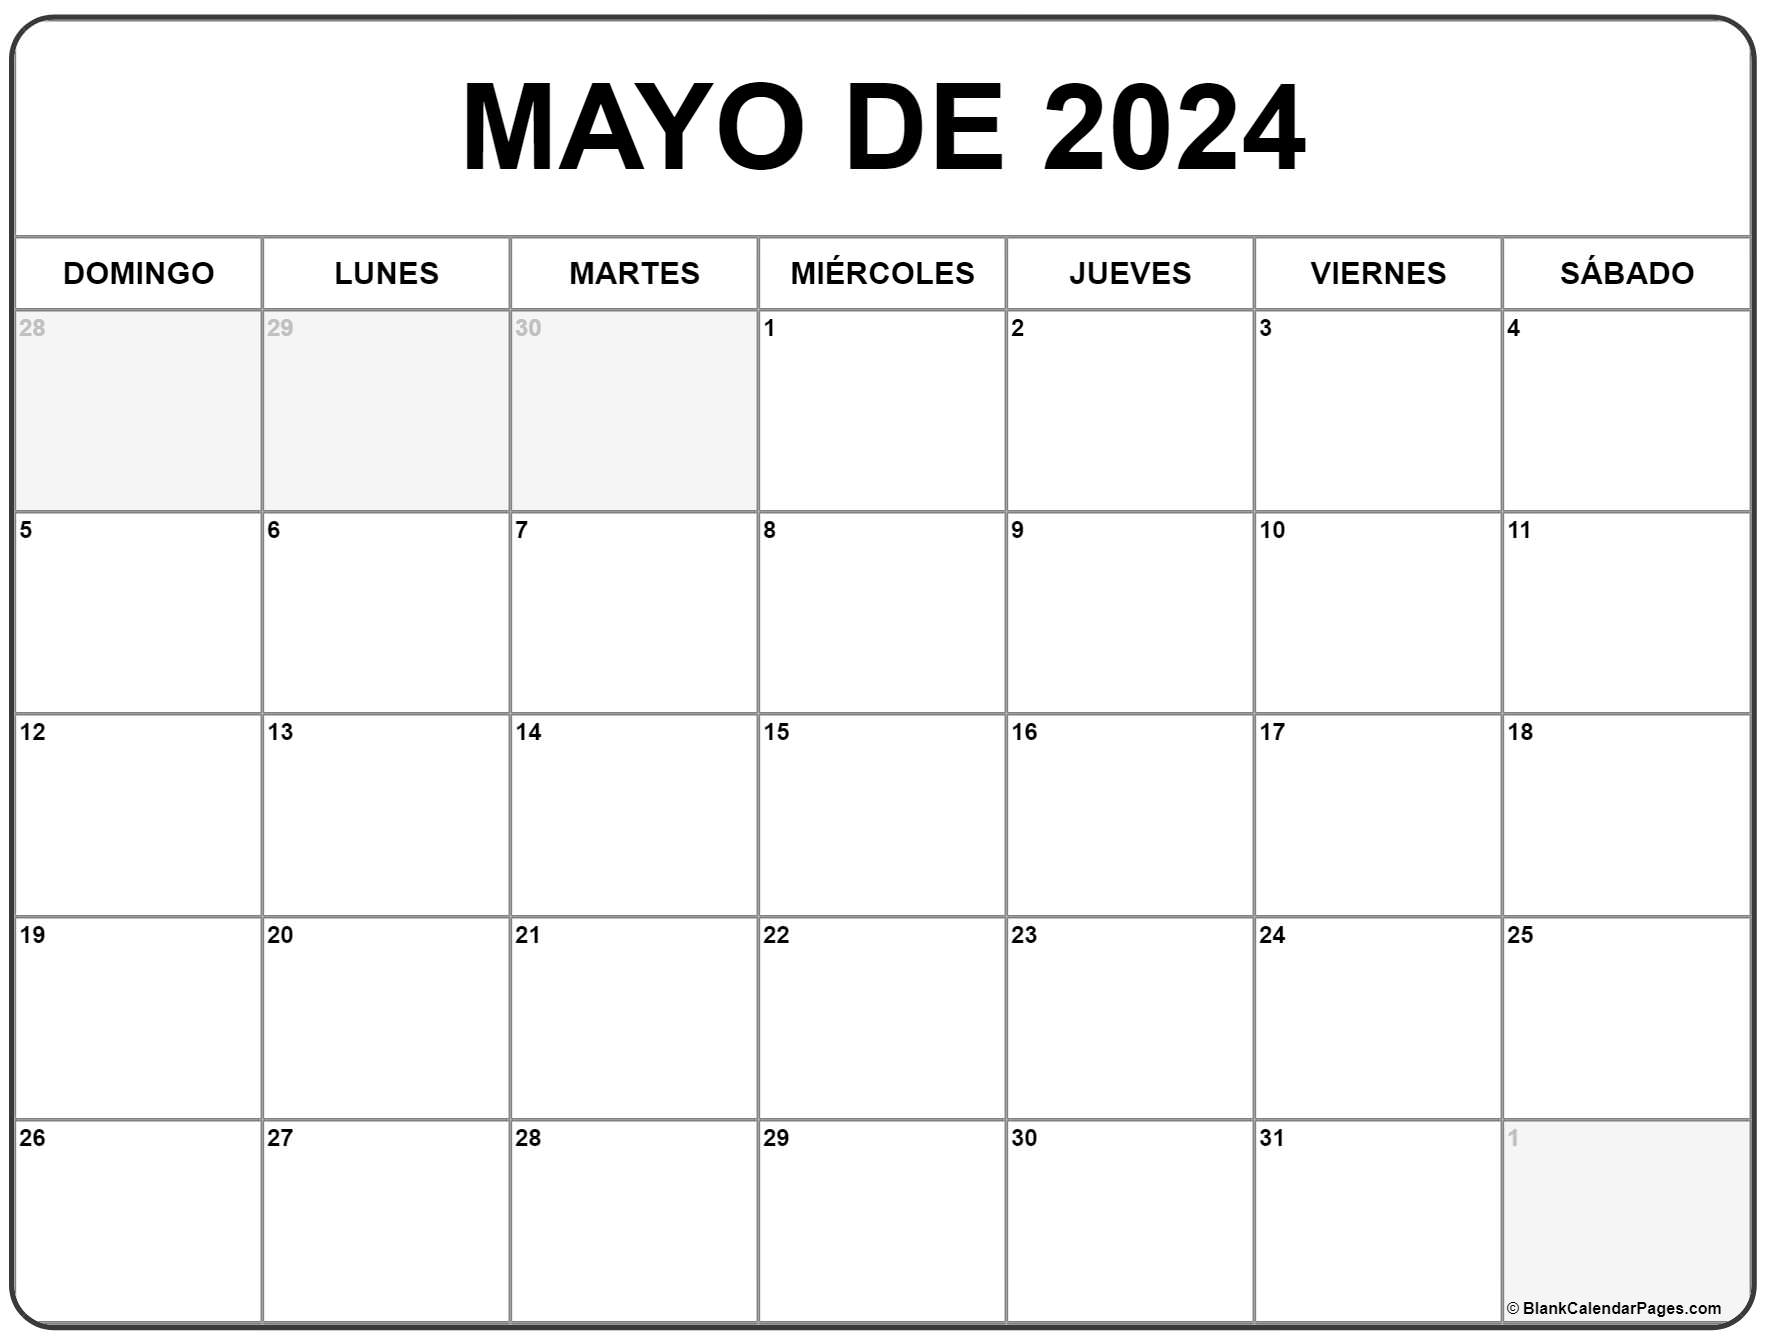 Calendario De Mayo 2022 mayo de 2022 calendario gratis | Calendario mayo